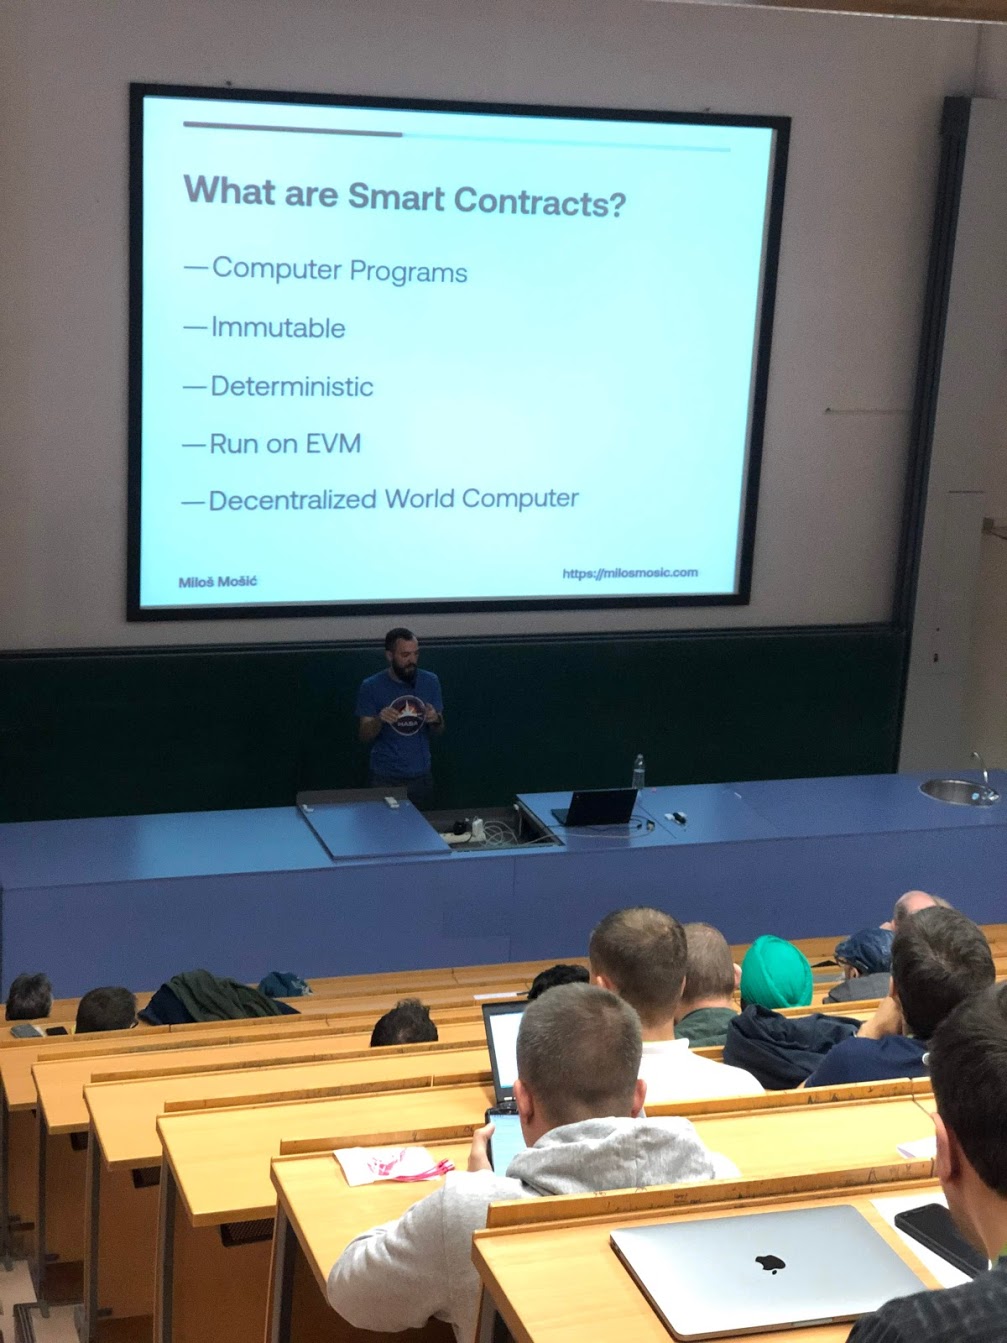 Miloš Mošić explaining what Smart Contracts are